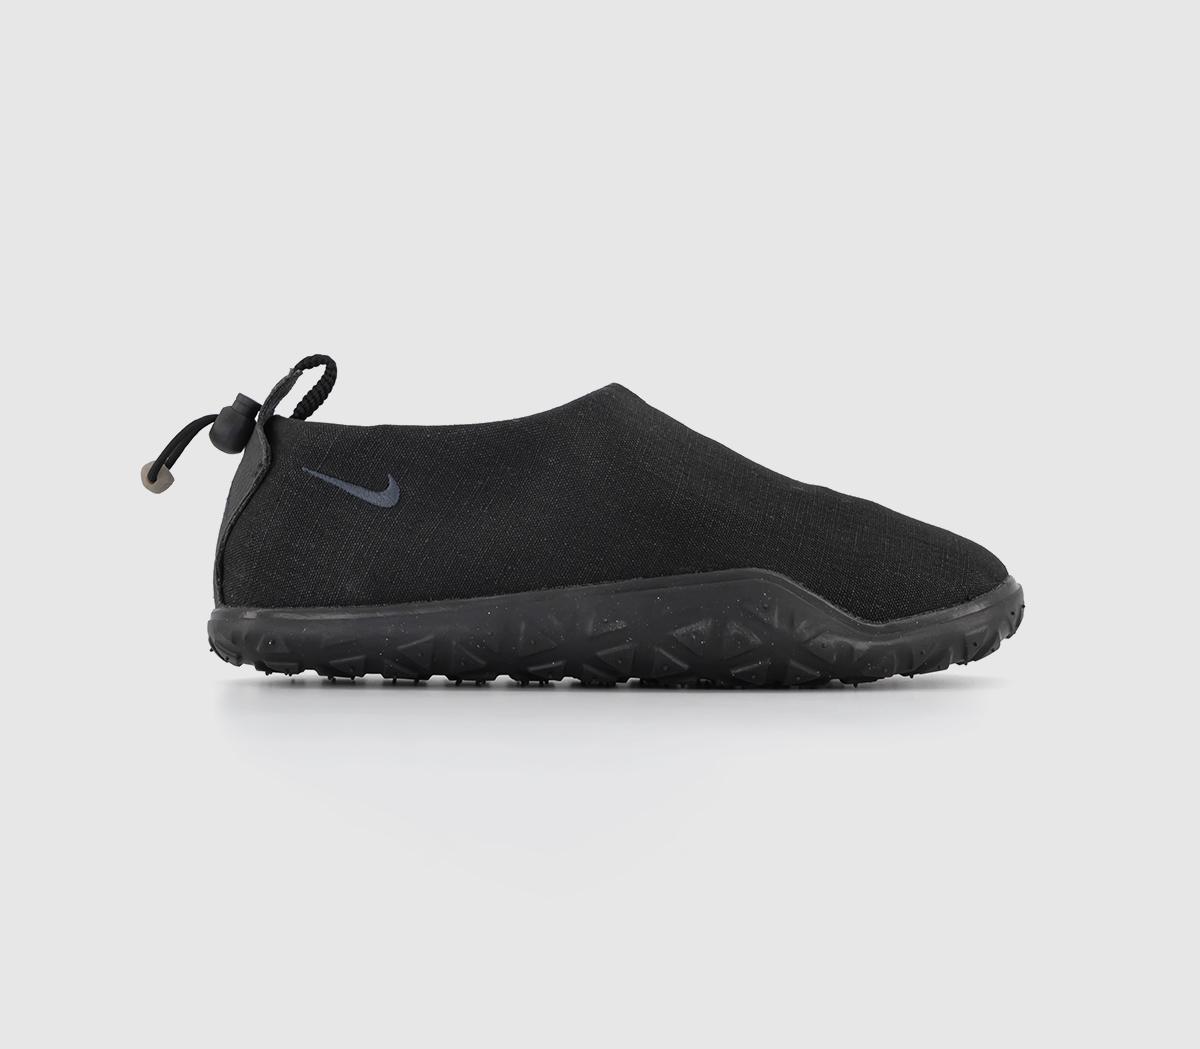 NikeACG Moc ShoesBlack Anthracite Black